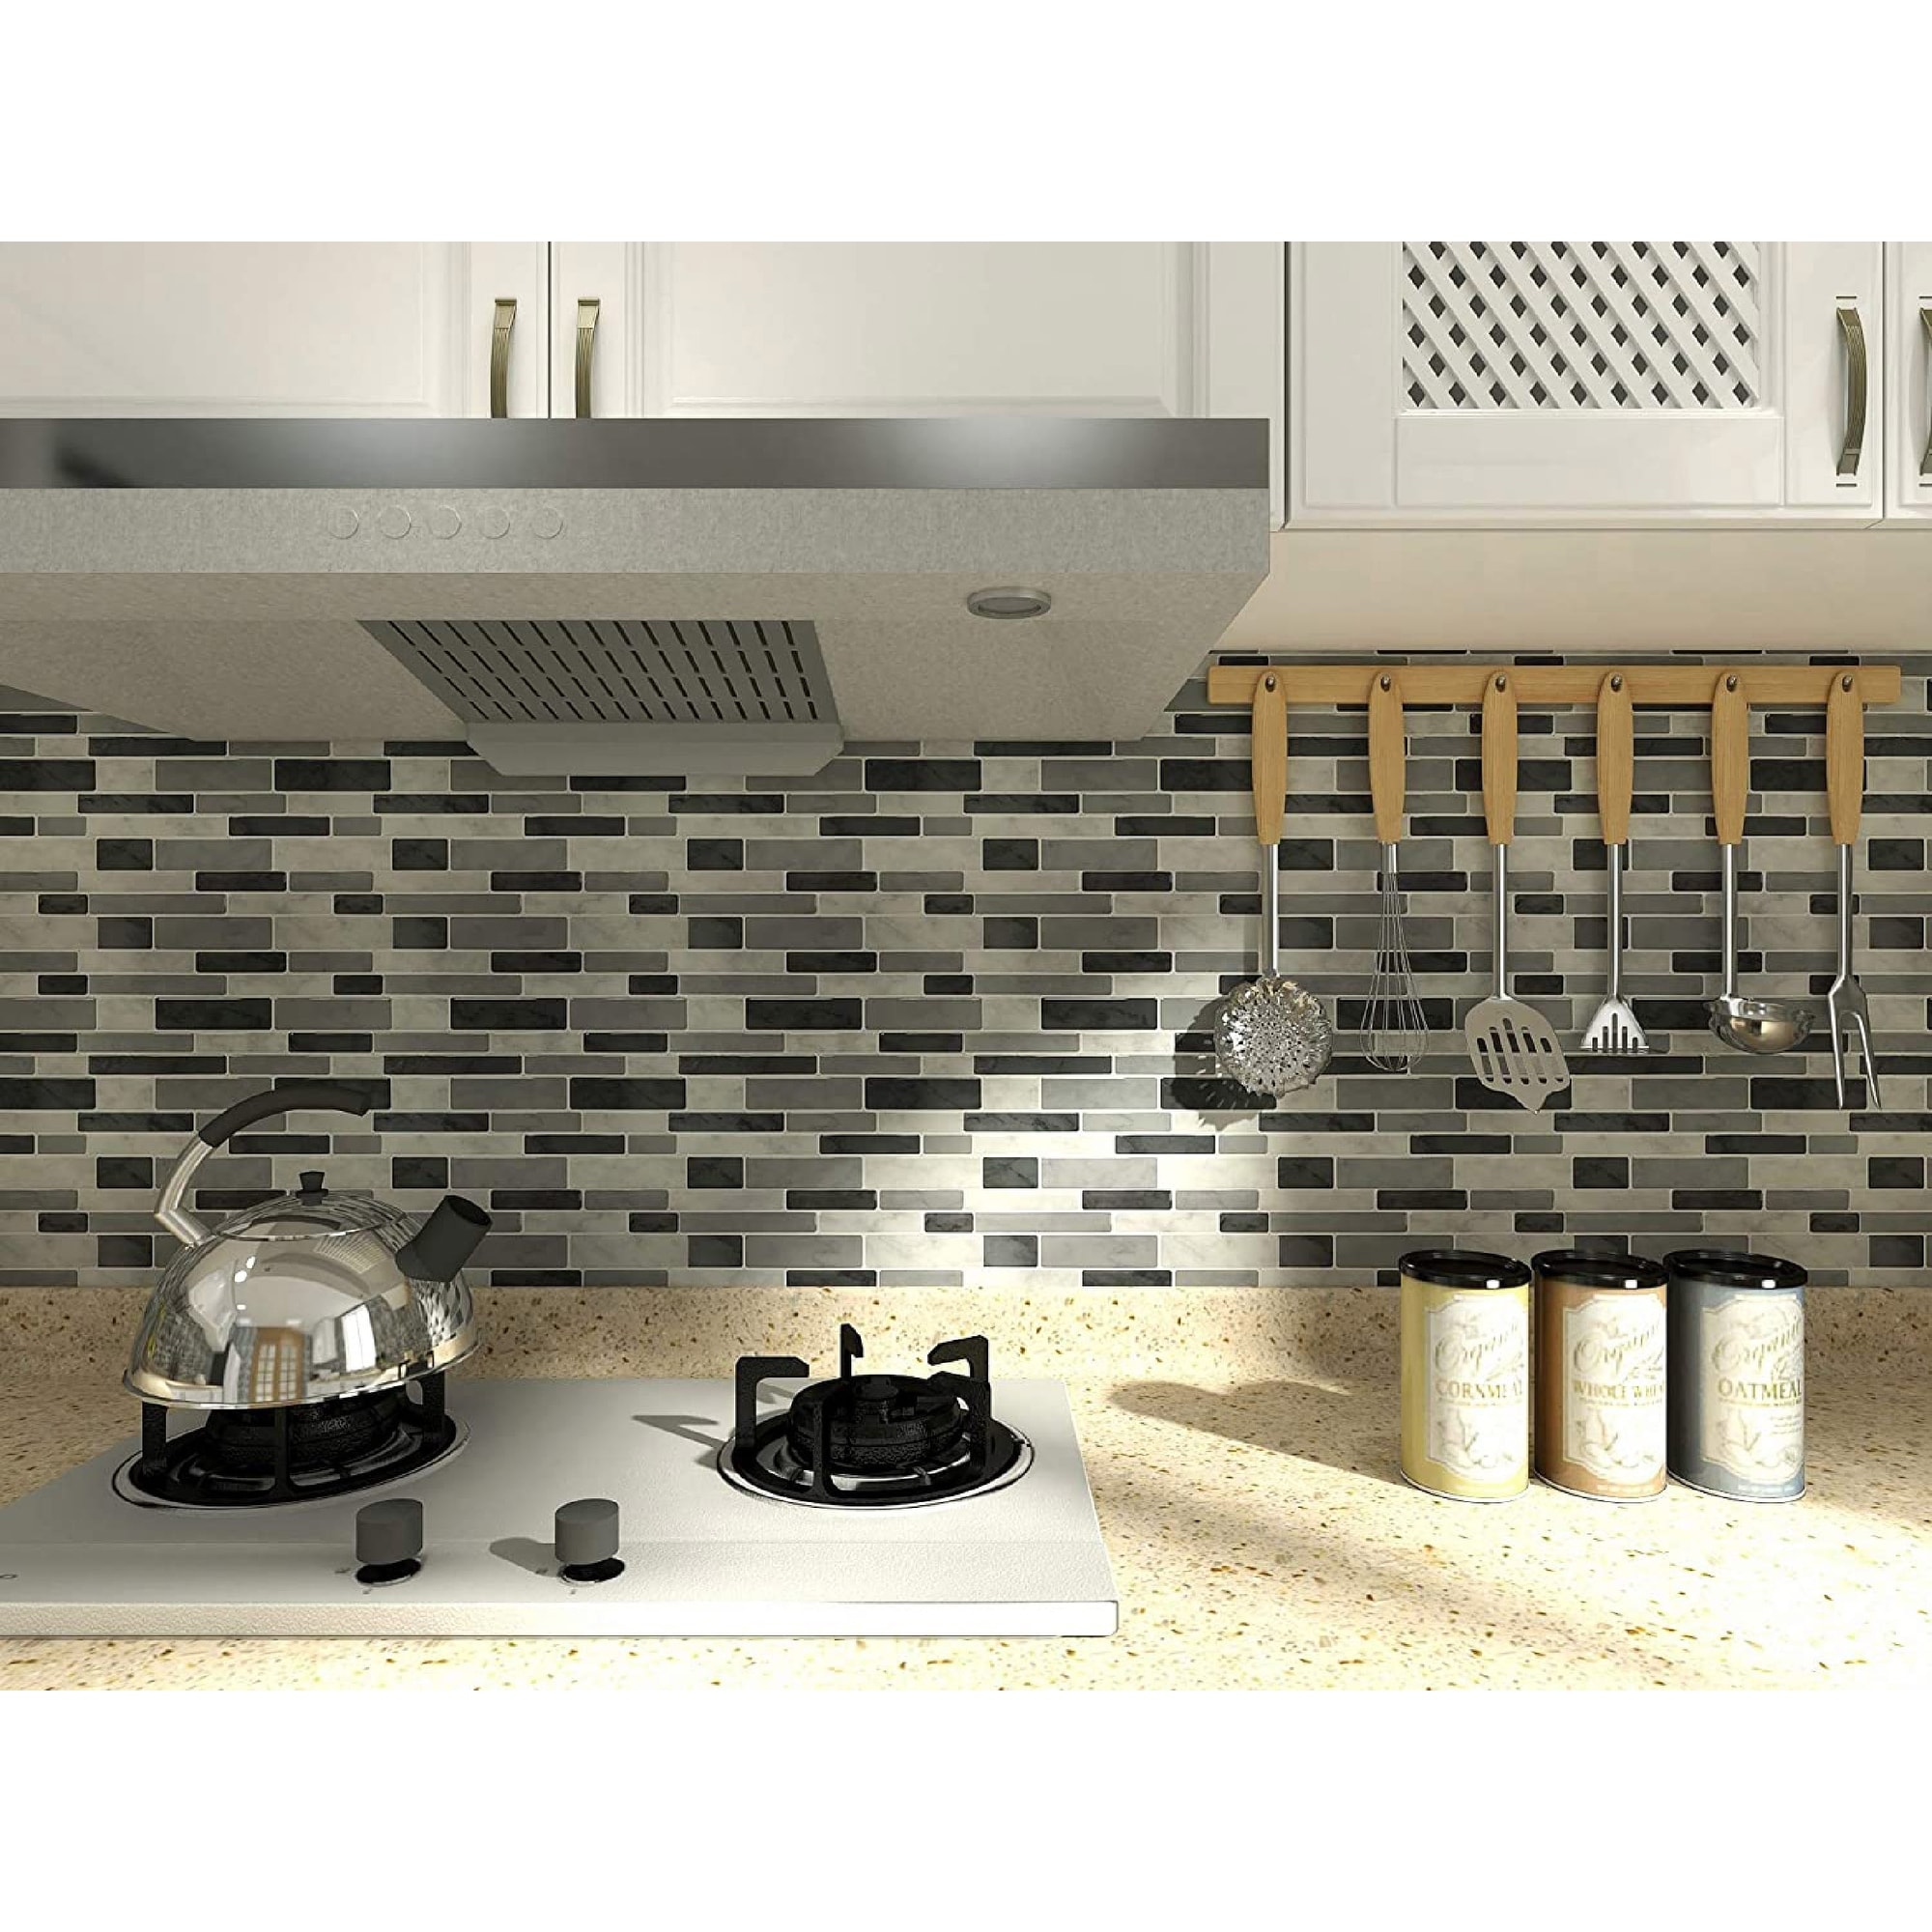 Art3d 4x12 Peel and Stick Tile Backsplash for Kitchen Stainless